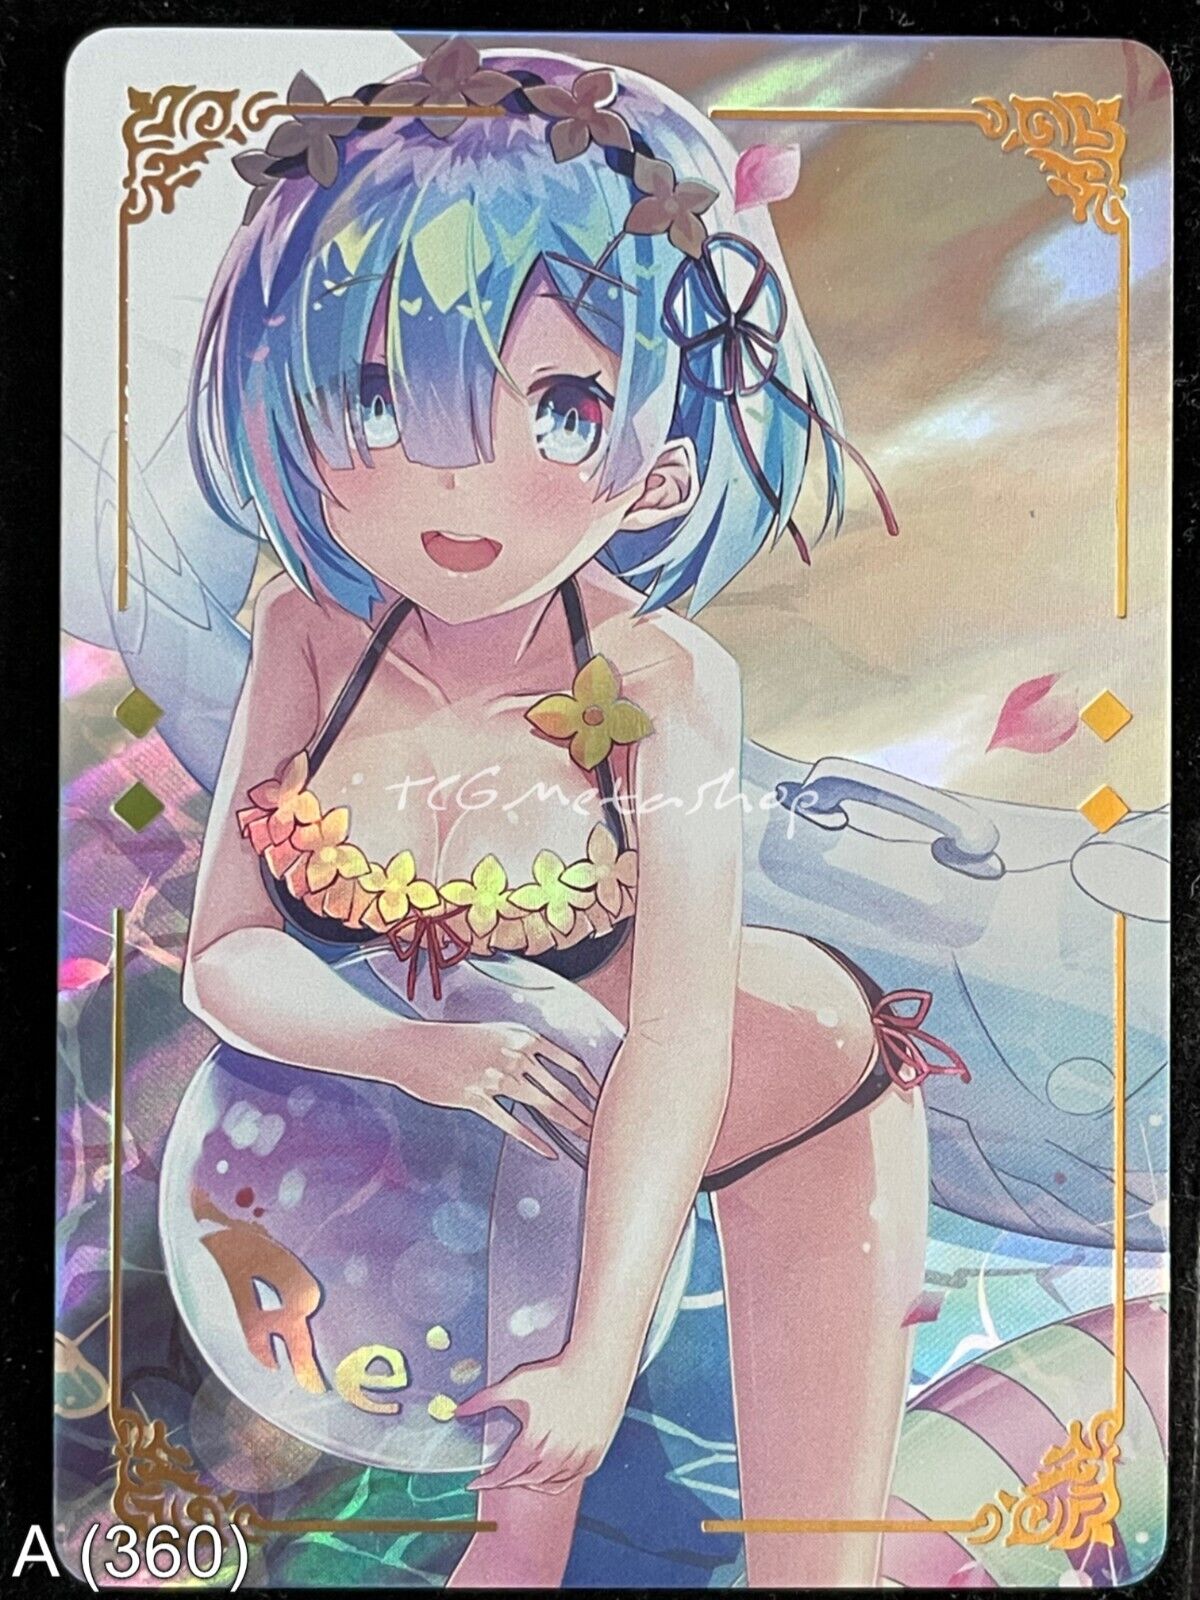 🔥 A 360 Rem Re:Zero Goddess Story Anime Waifu Card ACG 🔥